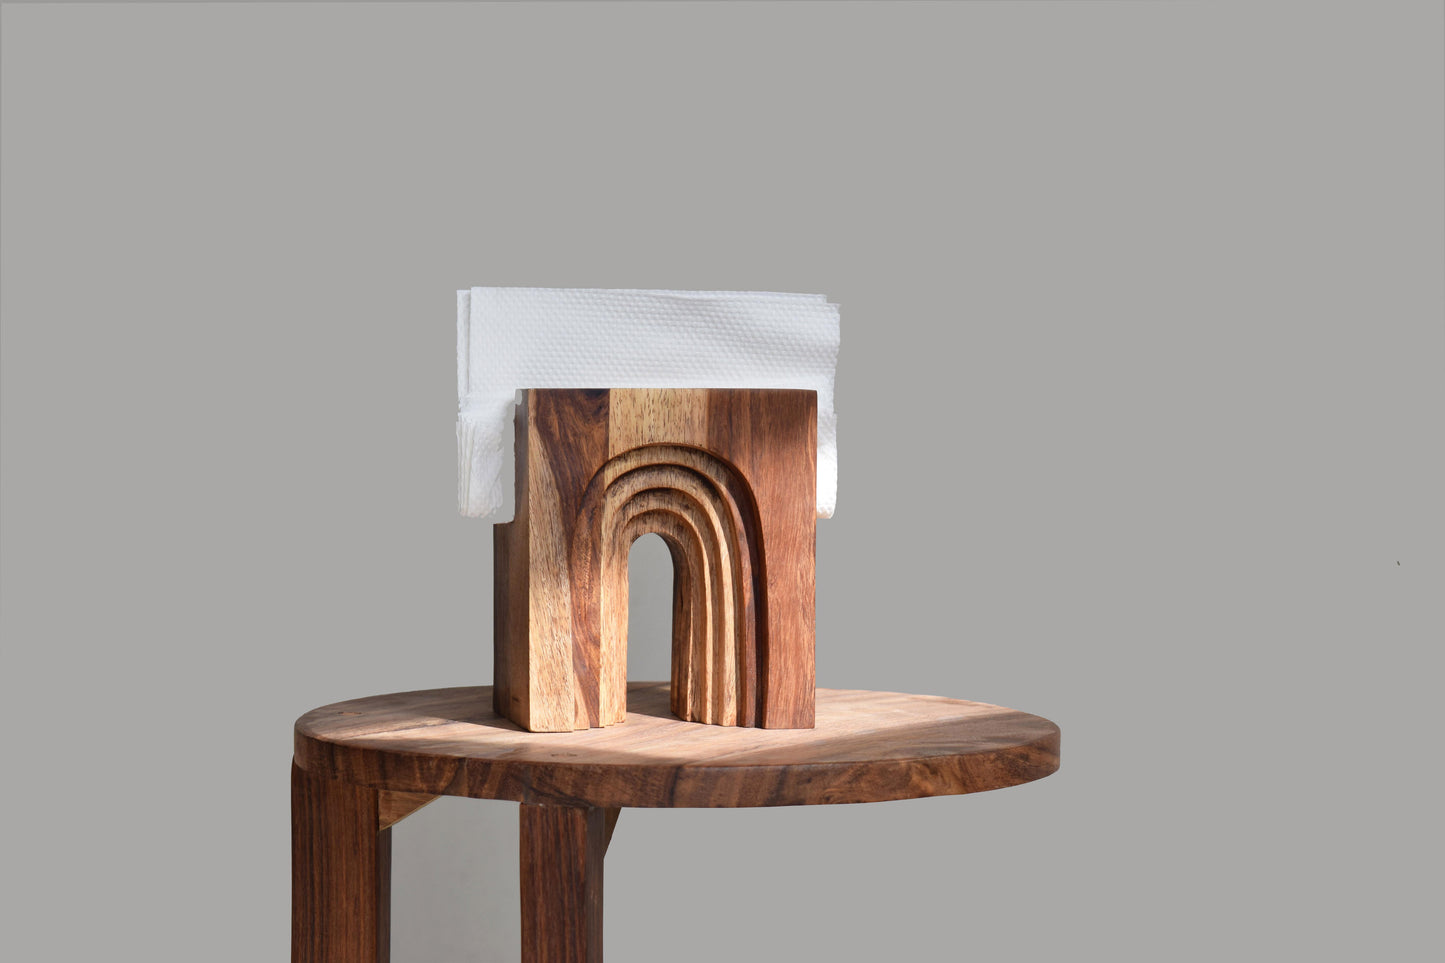 Napkin holder in sheesham wood for utility and decor